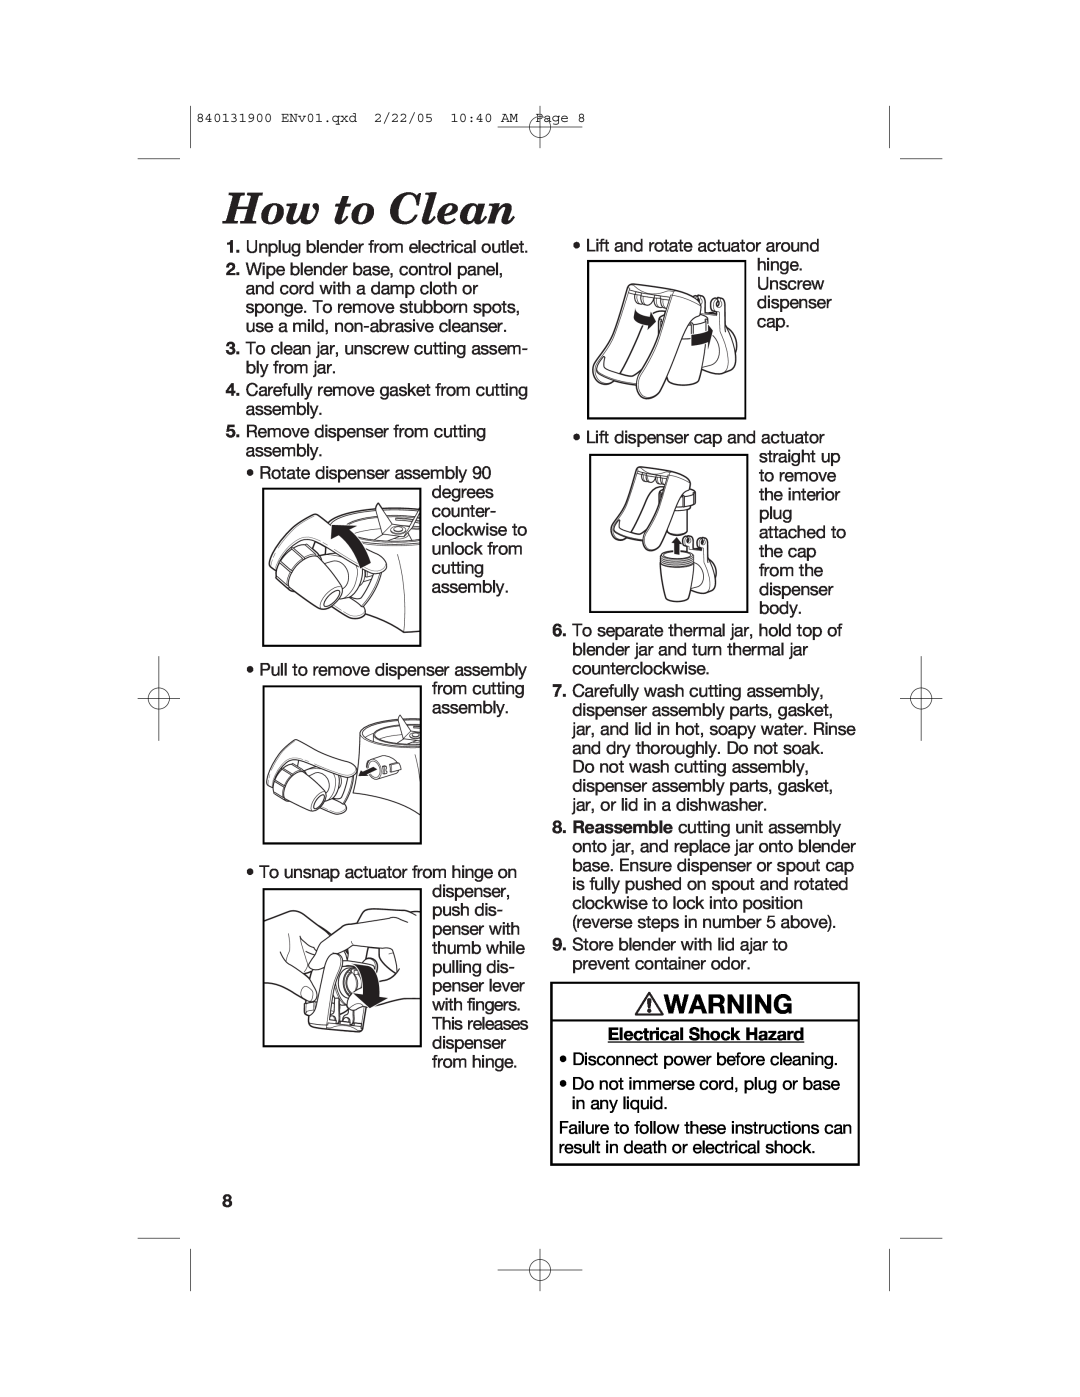 Hamilton Beach 50754C manual How to Clean, Electrical Shock Hazard 